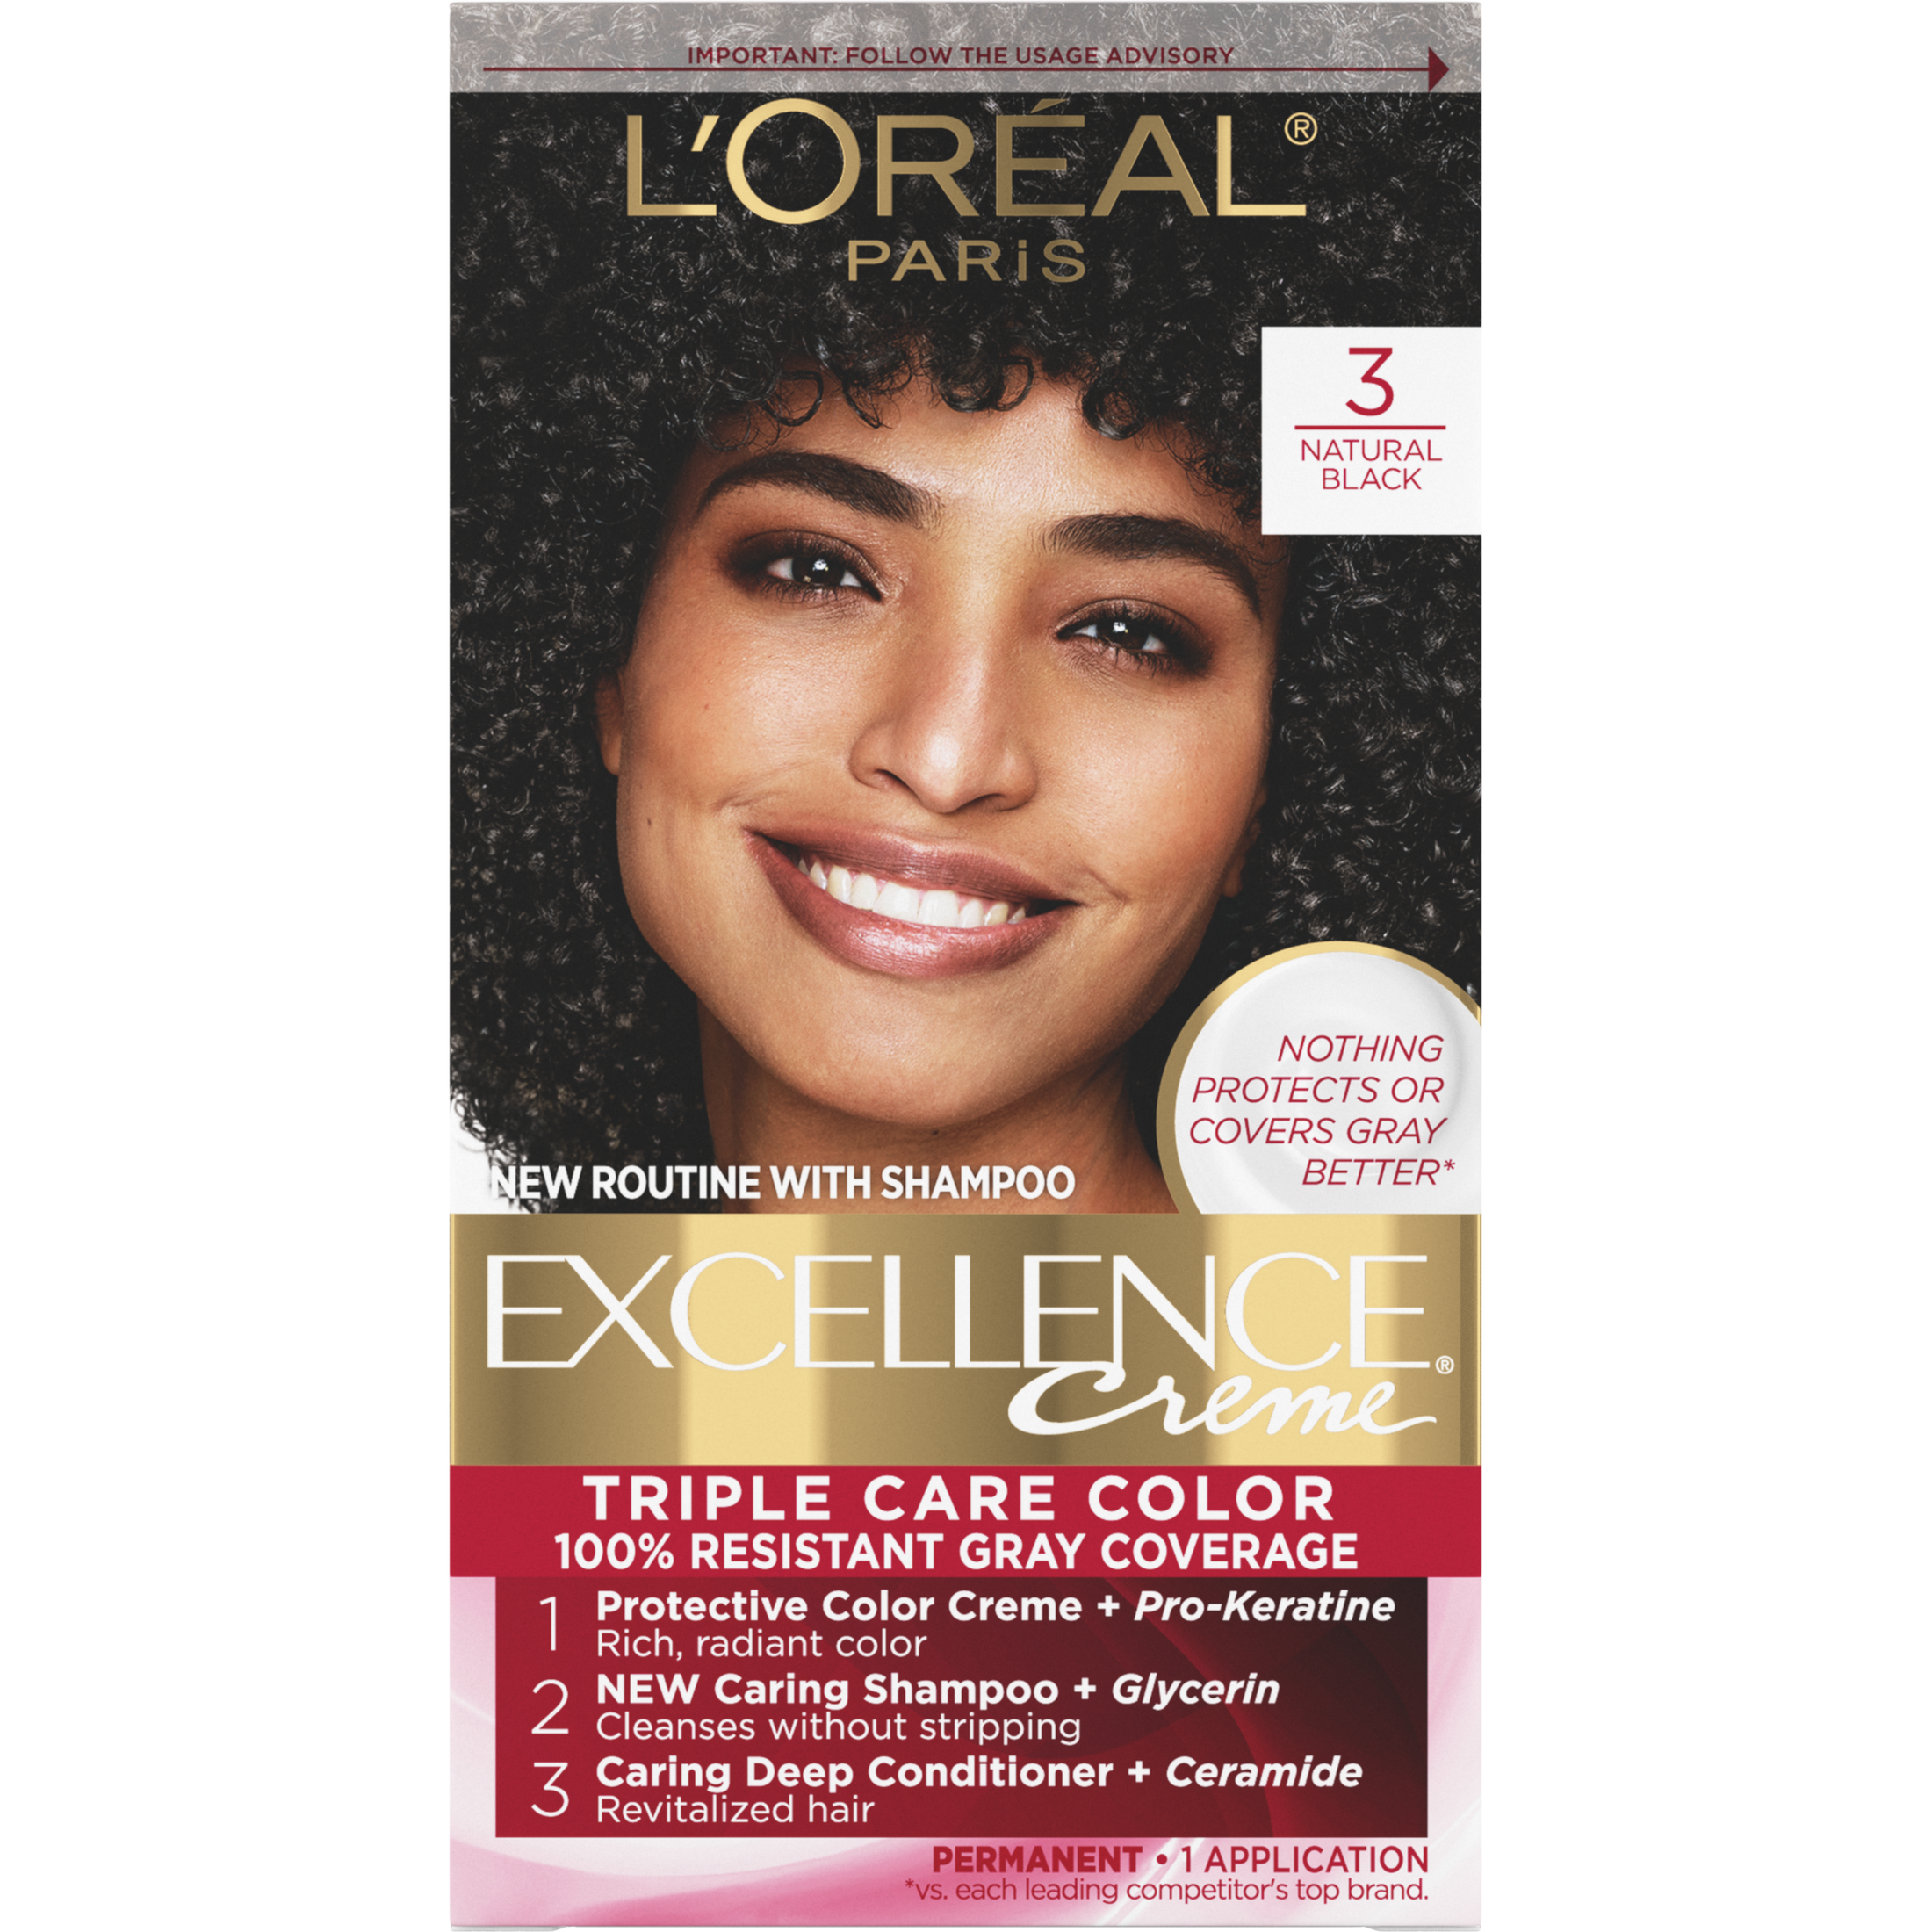 L'Oreal Paris Excellence Creme Permanent Hair Color, 3 Natural Black - image 1 of 7